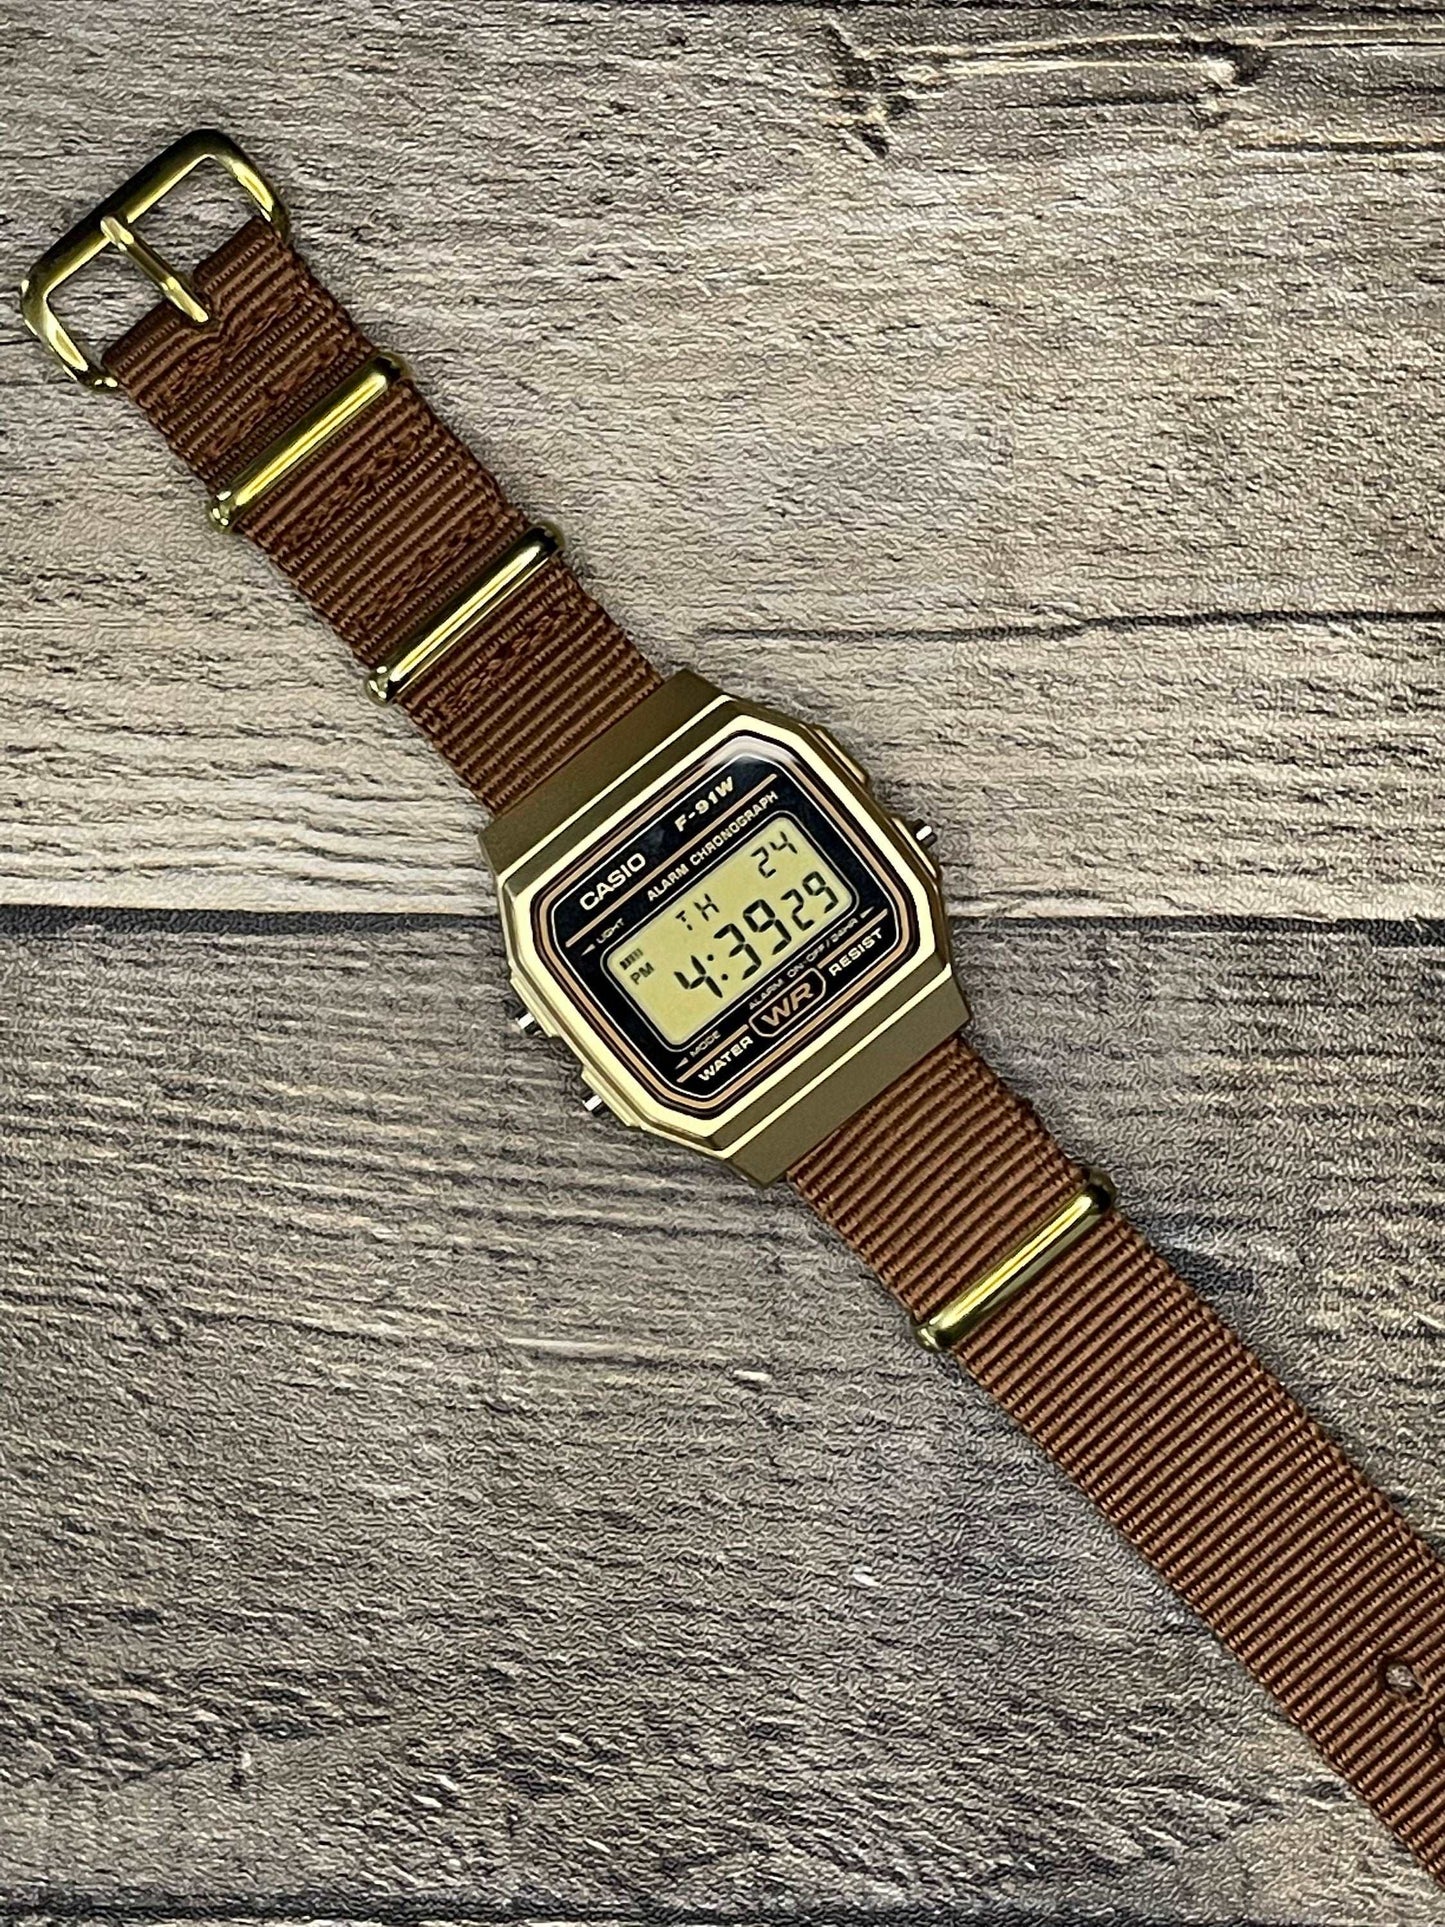 Custom Gold Casio Watch on Brown Strap